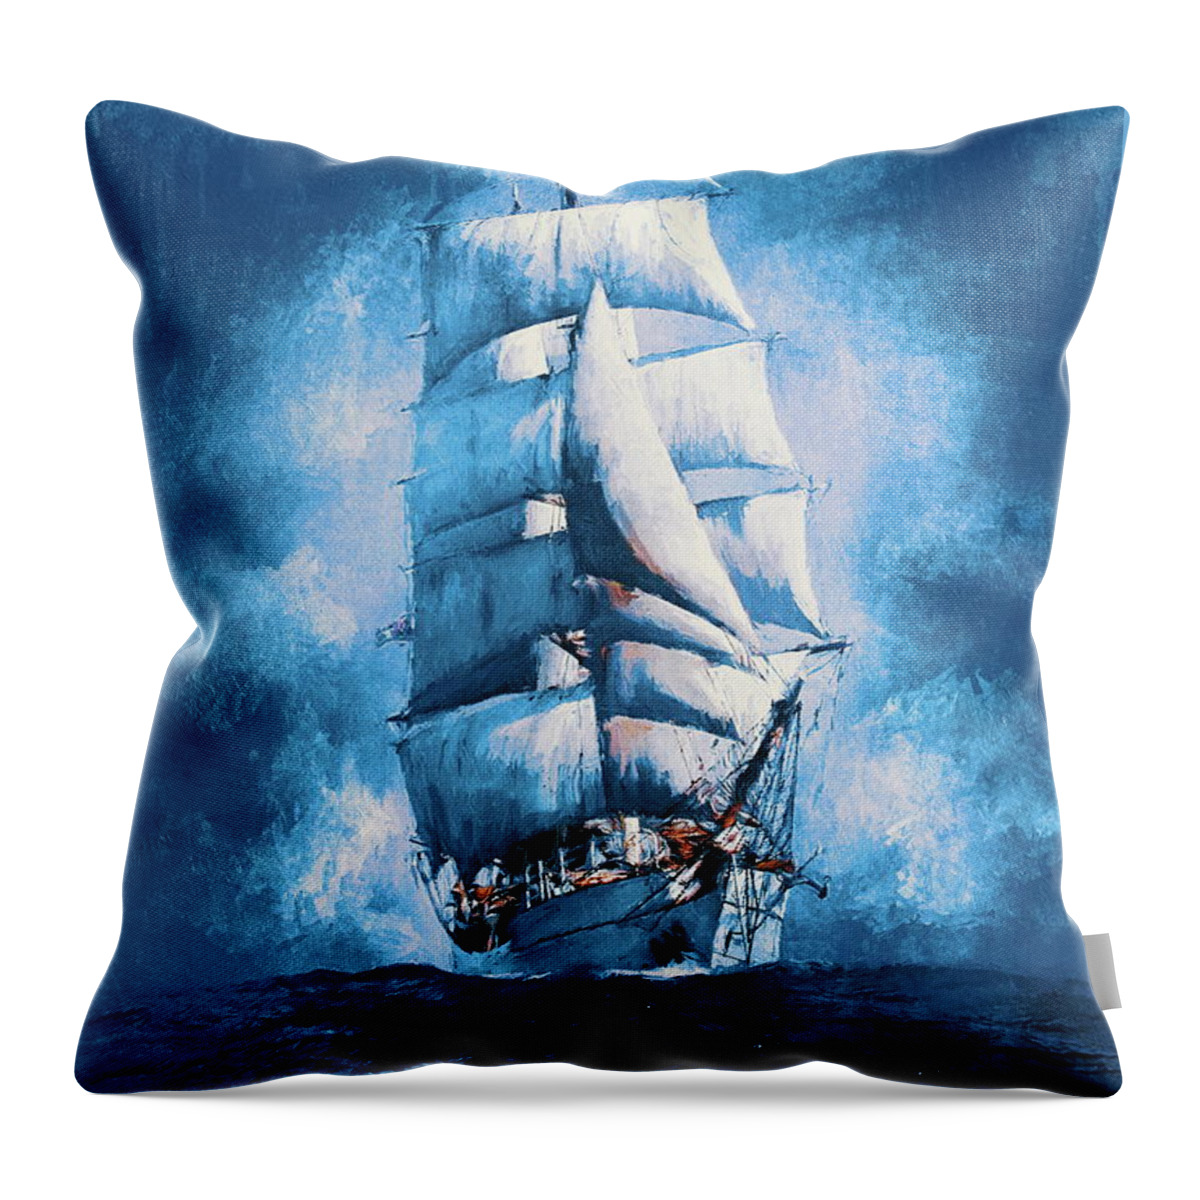 Sailing Throw Pillow featuring the digital art Tall ship. by Andrzej Szczerski